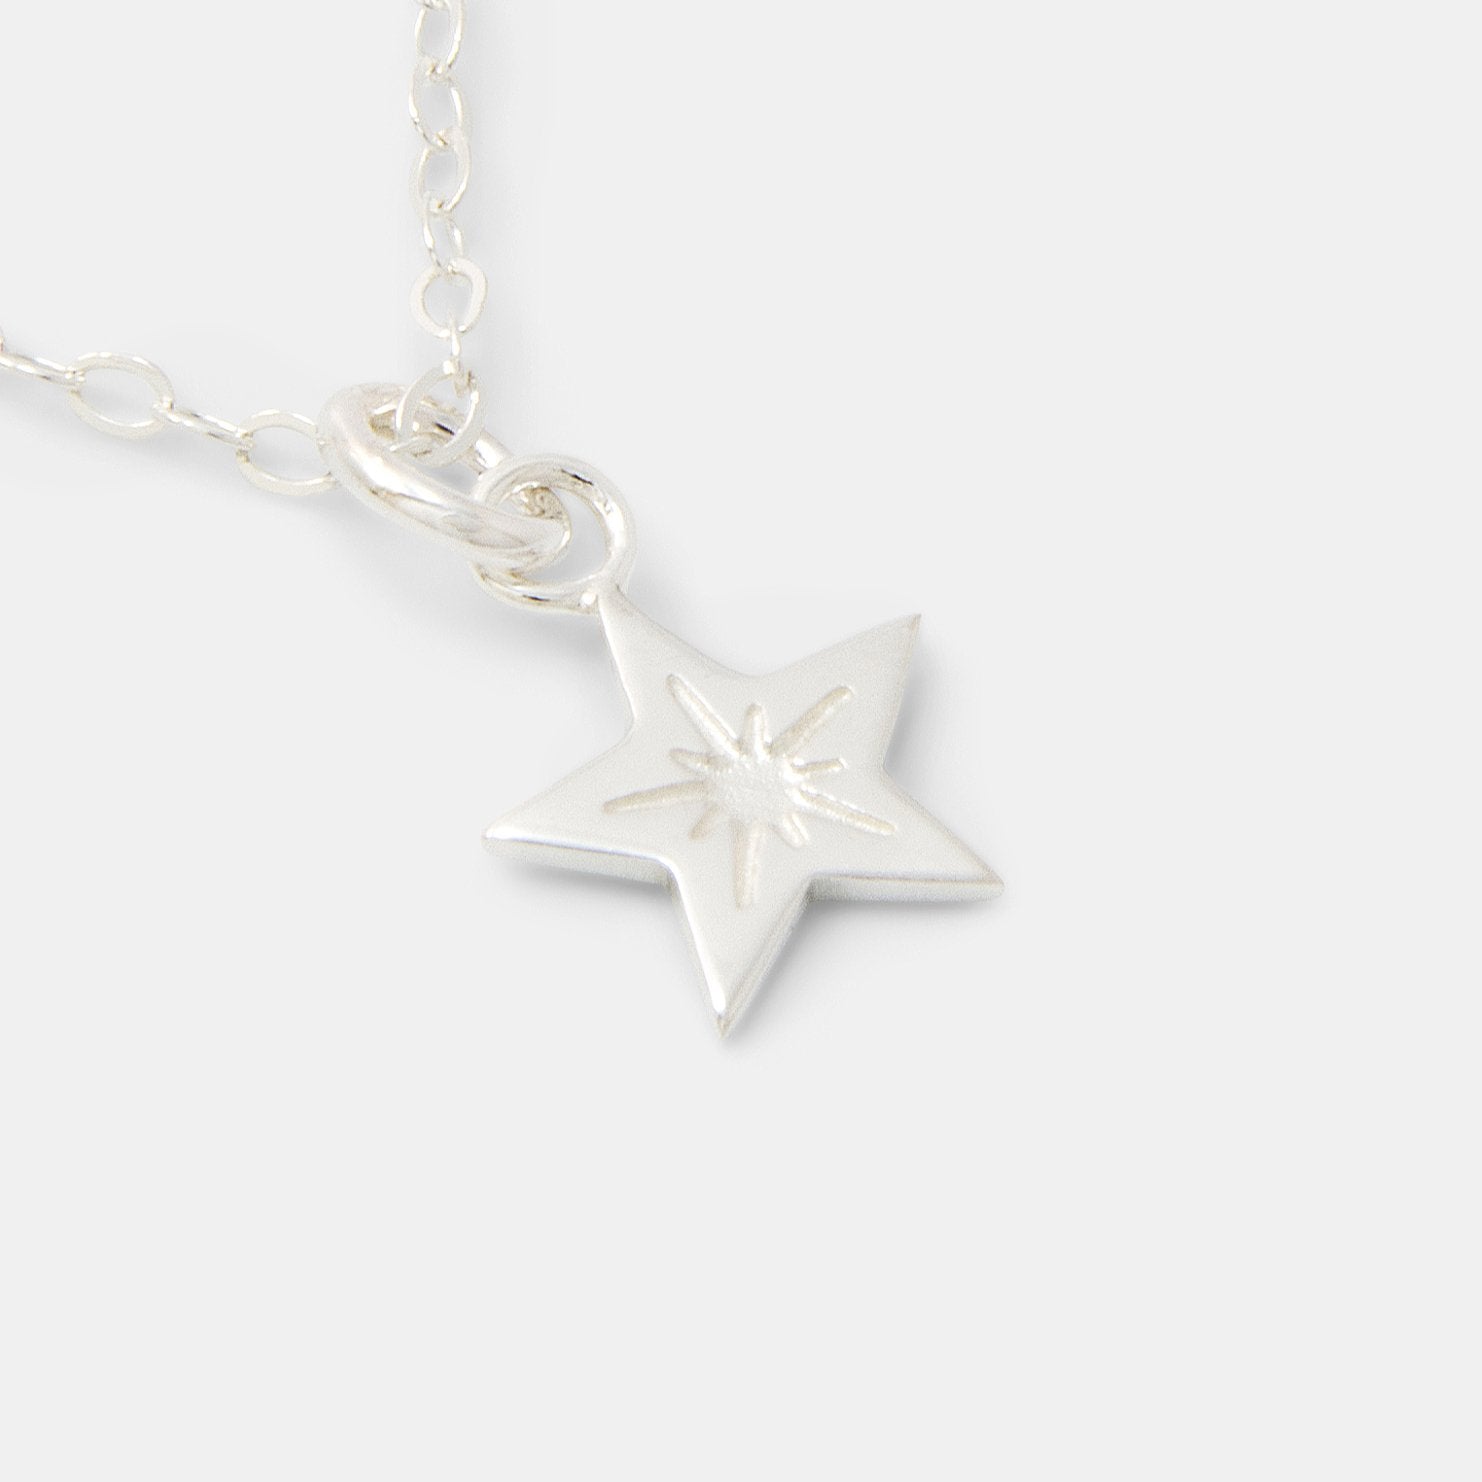 Little star silver pendant necklace - Simone Walsh Jewellery Australia